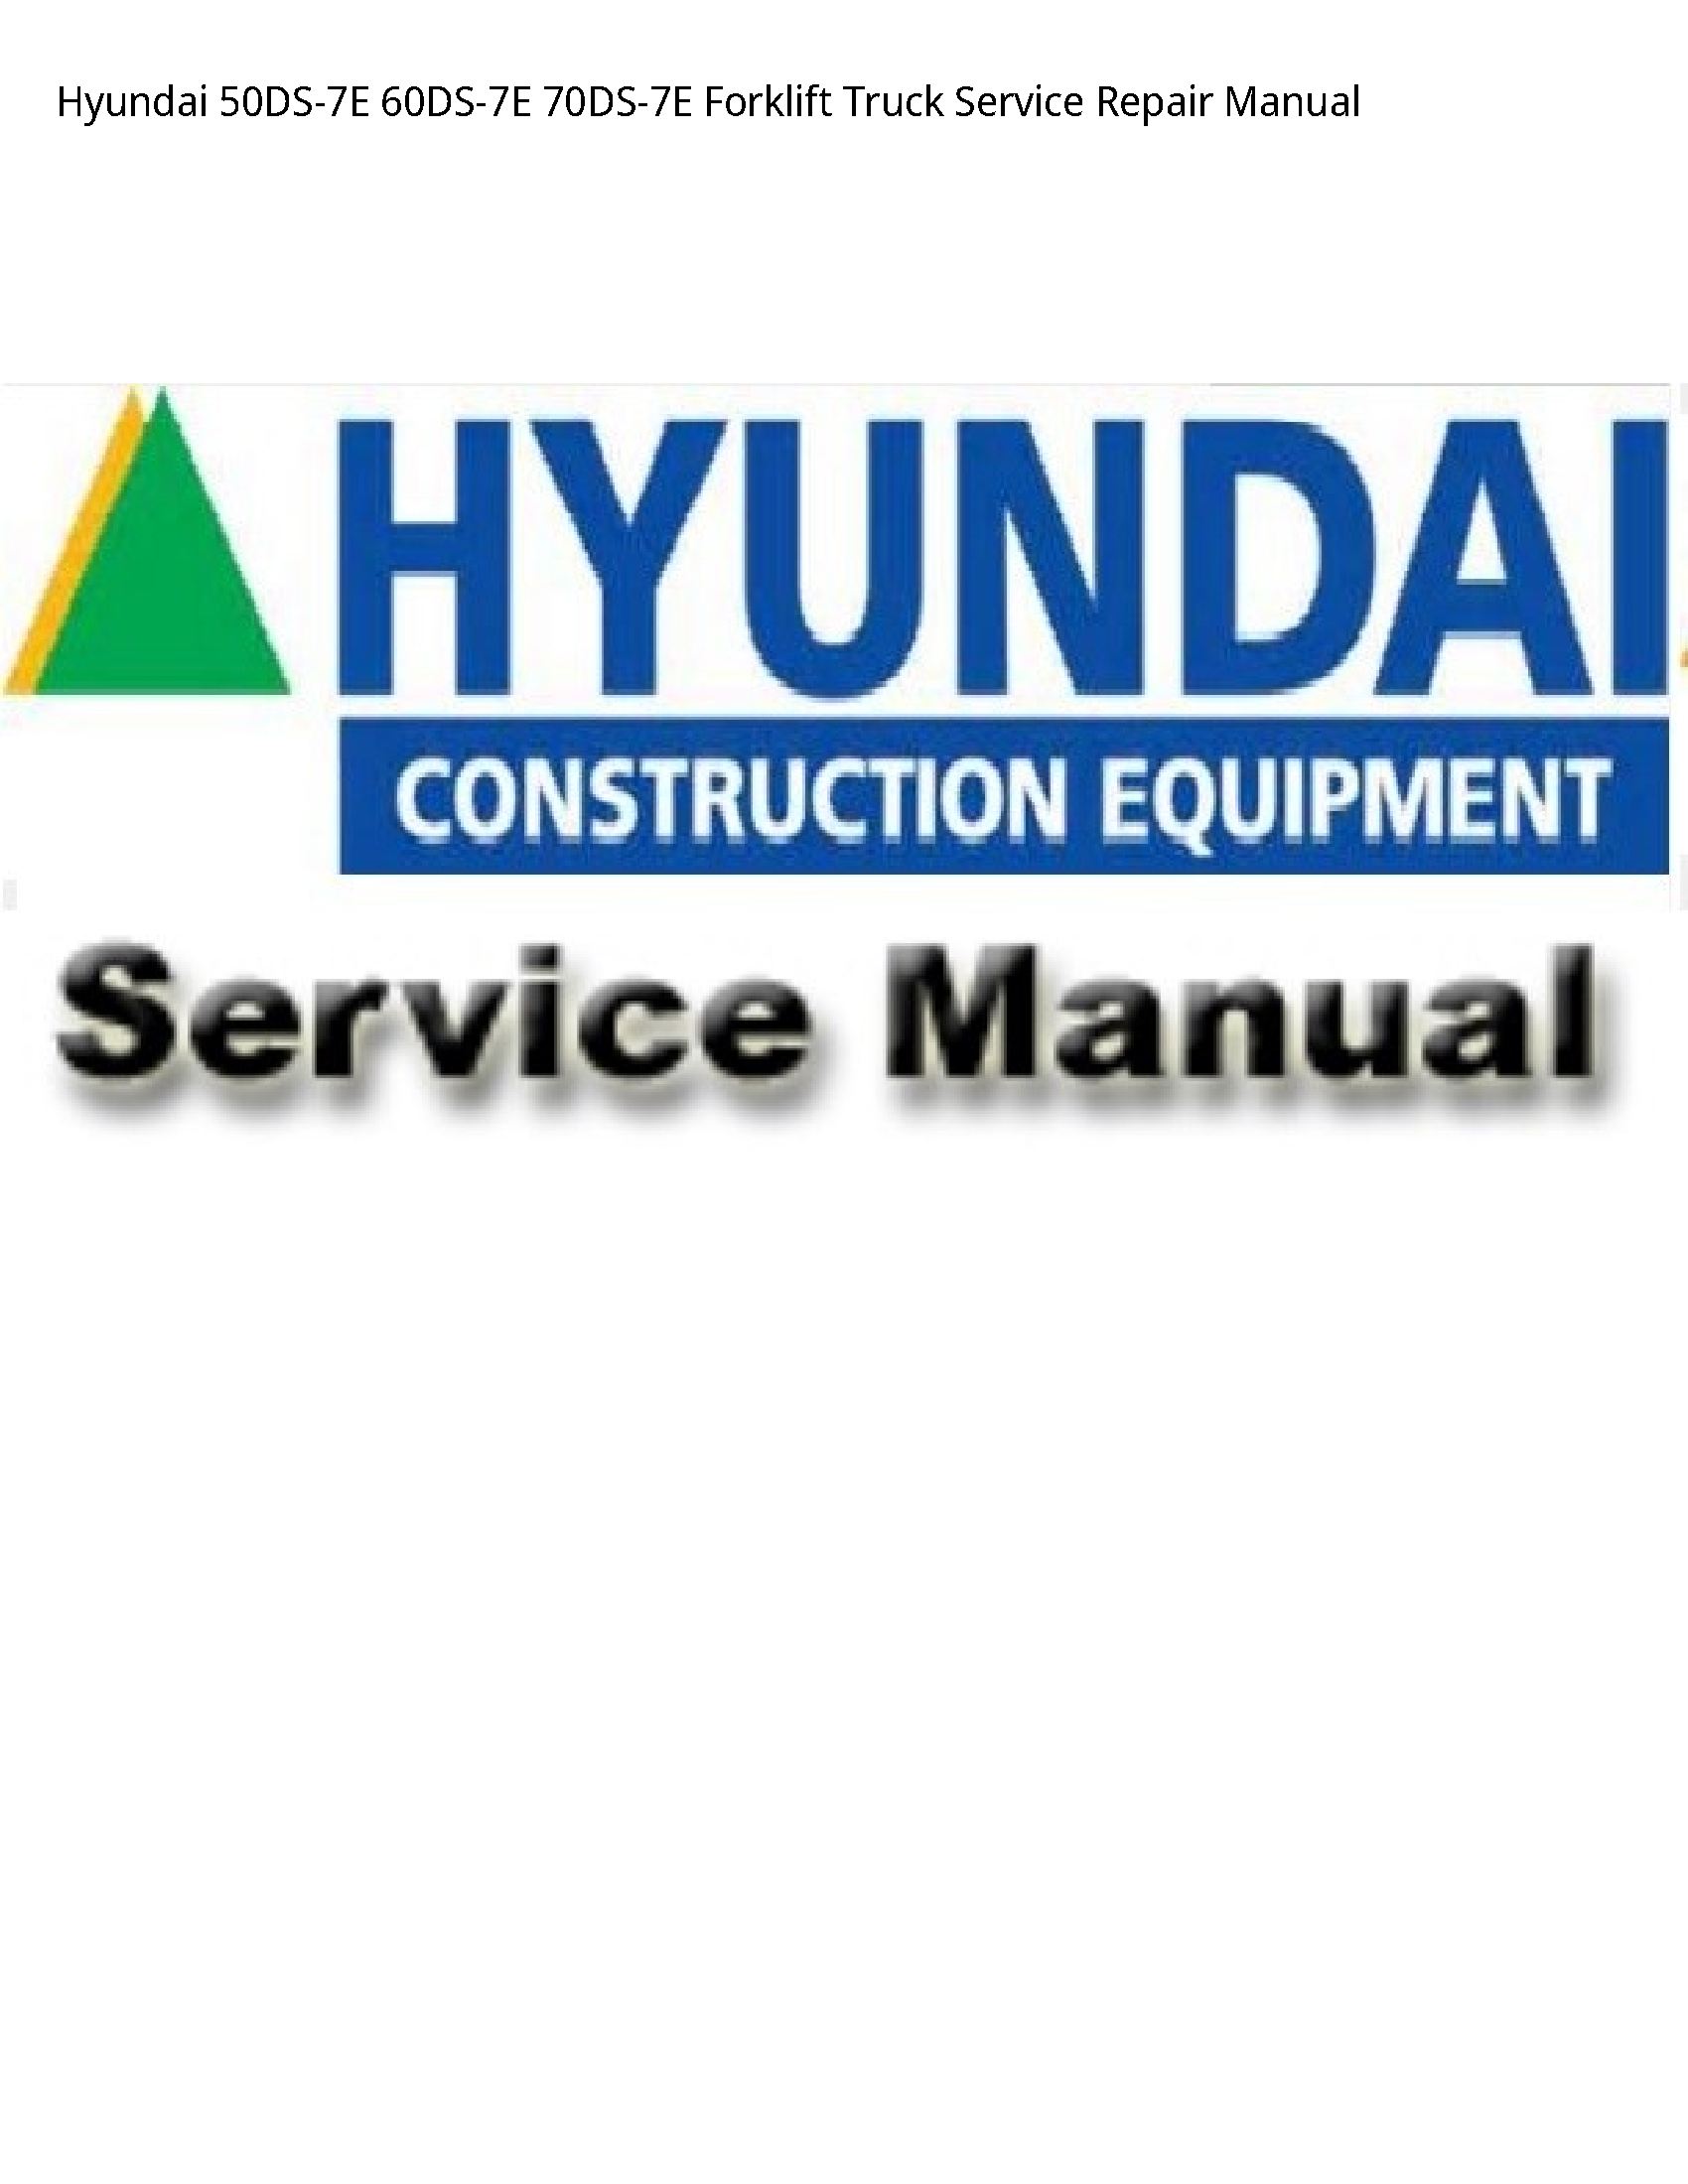 Hyundai 50DS-7E Forklift Truck manual